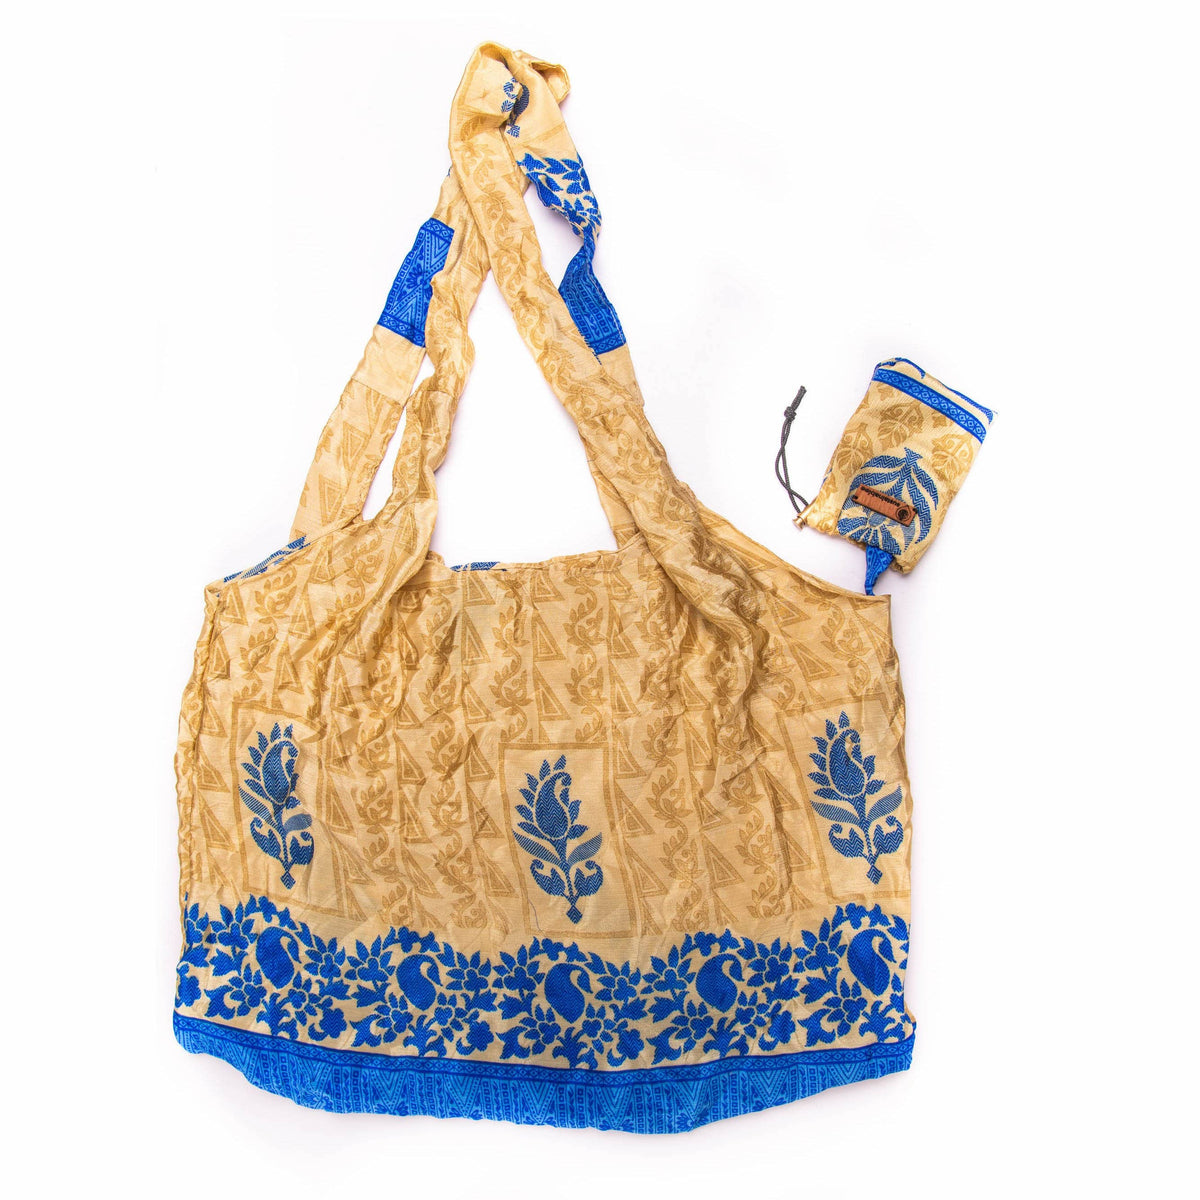 Swachhata Hi Seva: Khadi launches eco-friendly bags made from plastic waste